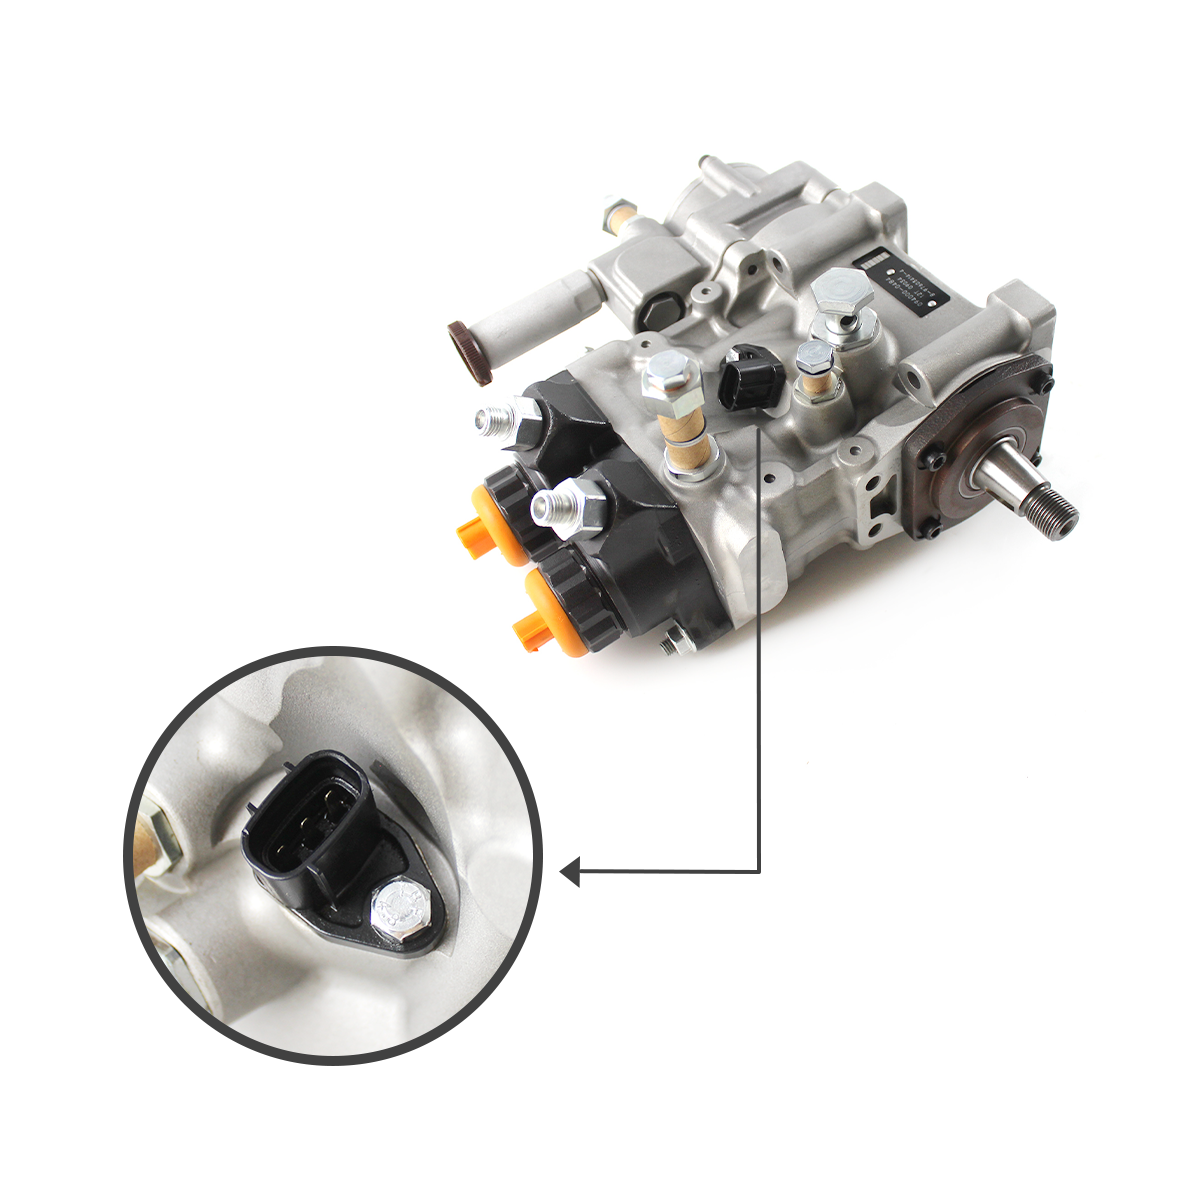 094000-0571 094000-0574 Fuel Injection Pump for Komatsu PC400-8 PC450-8 - Sinocmp